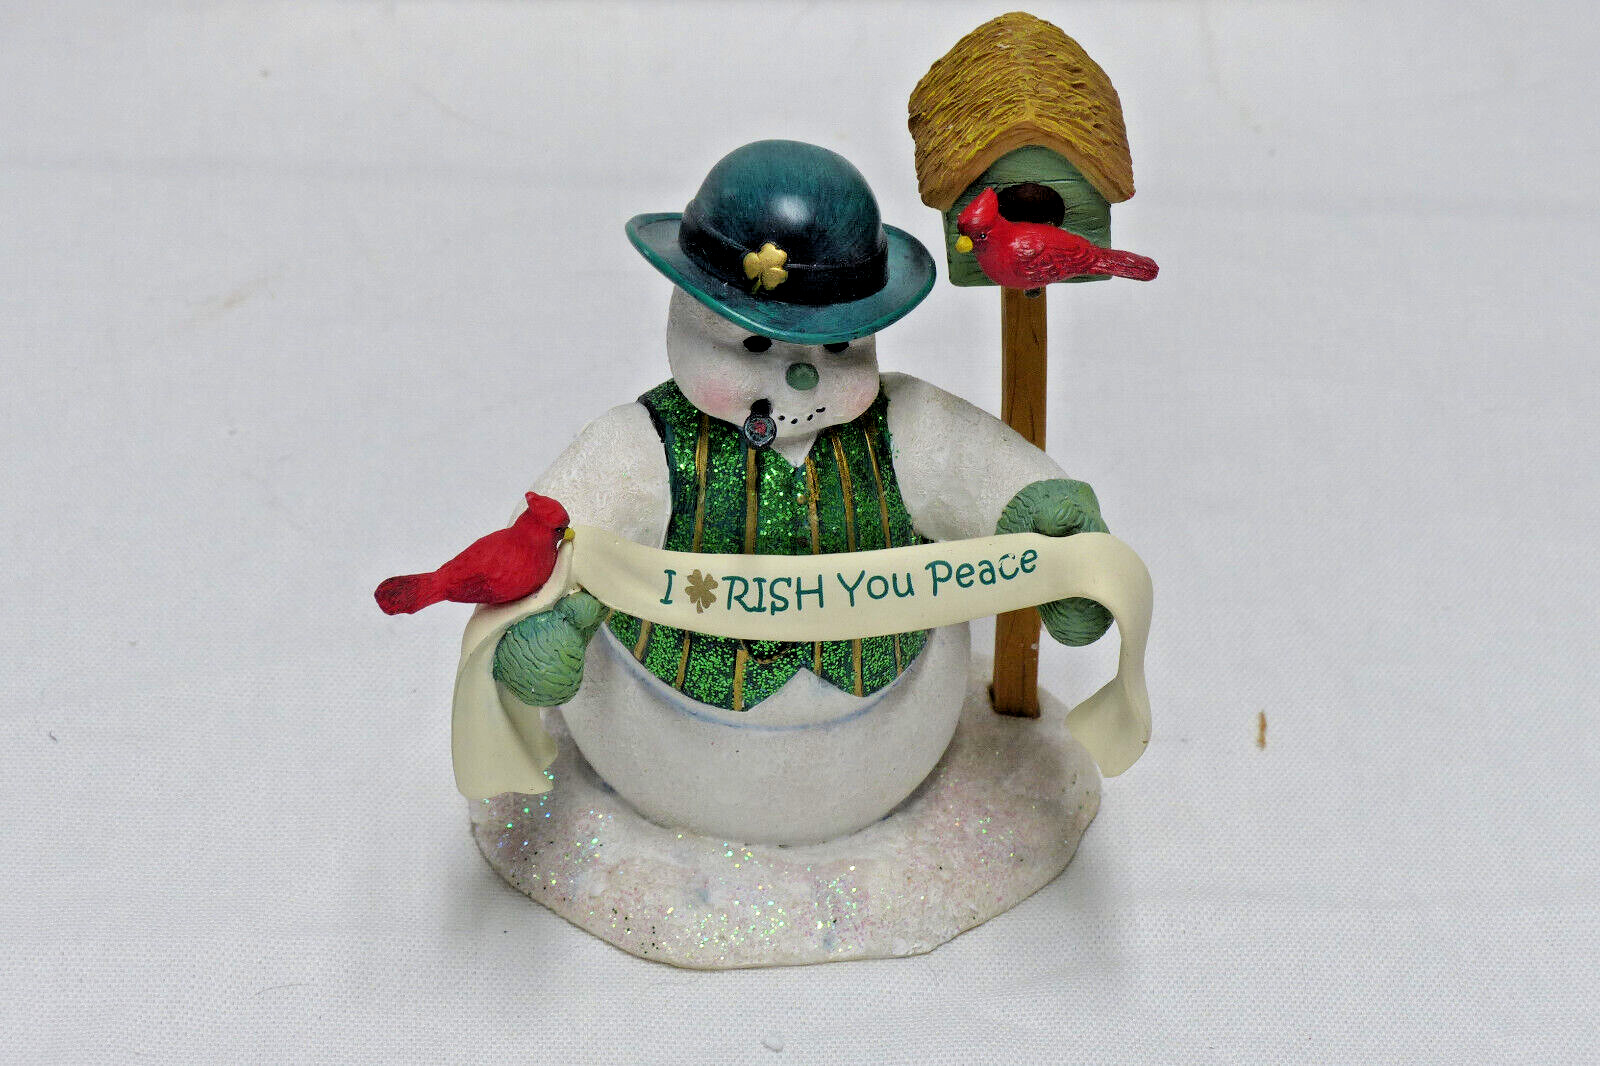 Hamilton Collection Irish Wishes Snowman Figurine I-rish You Peace